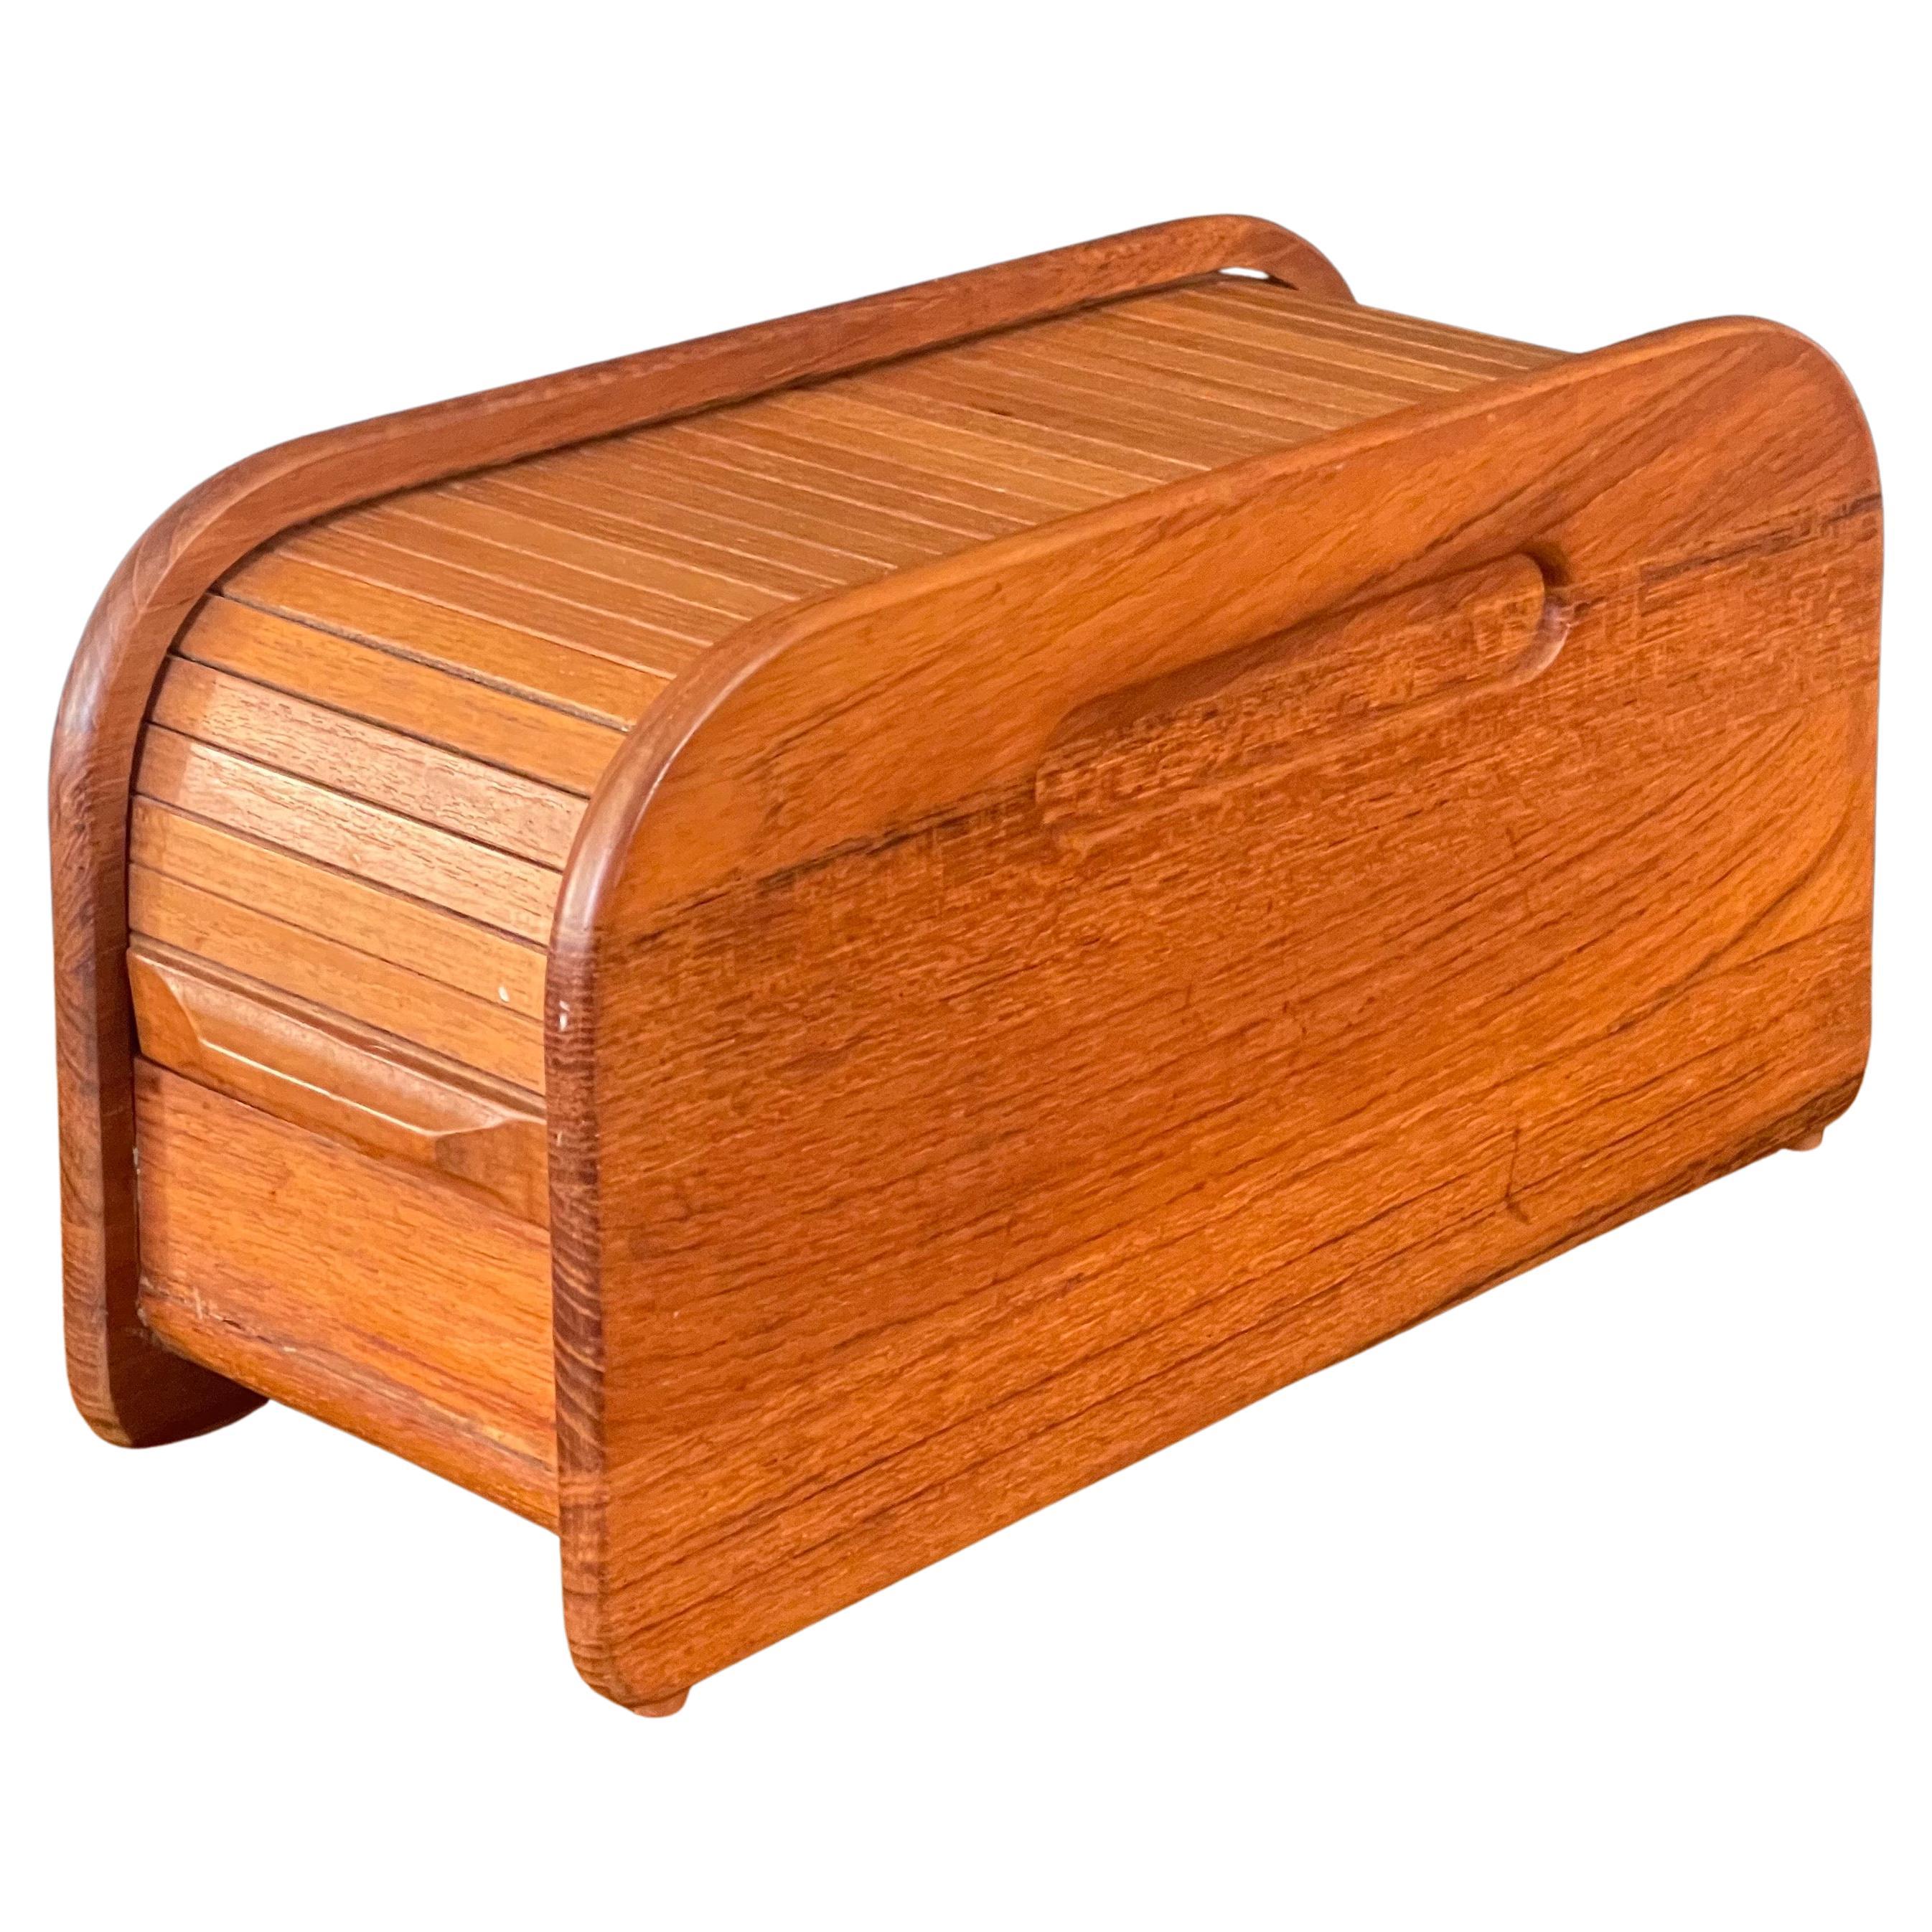 Small Danish Modern Tambour Top Teak Box